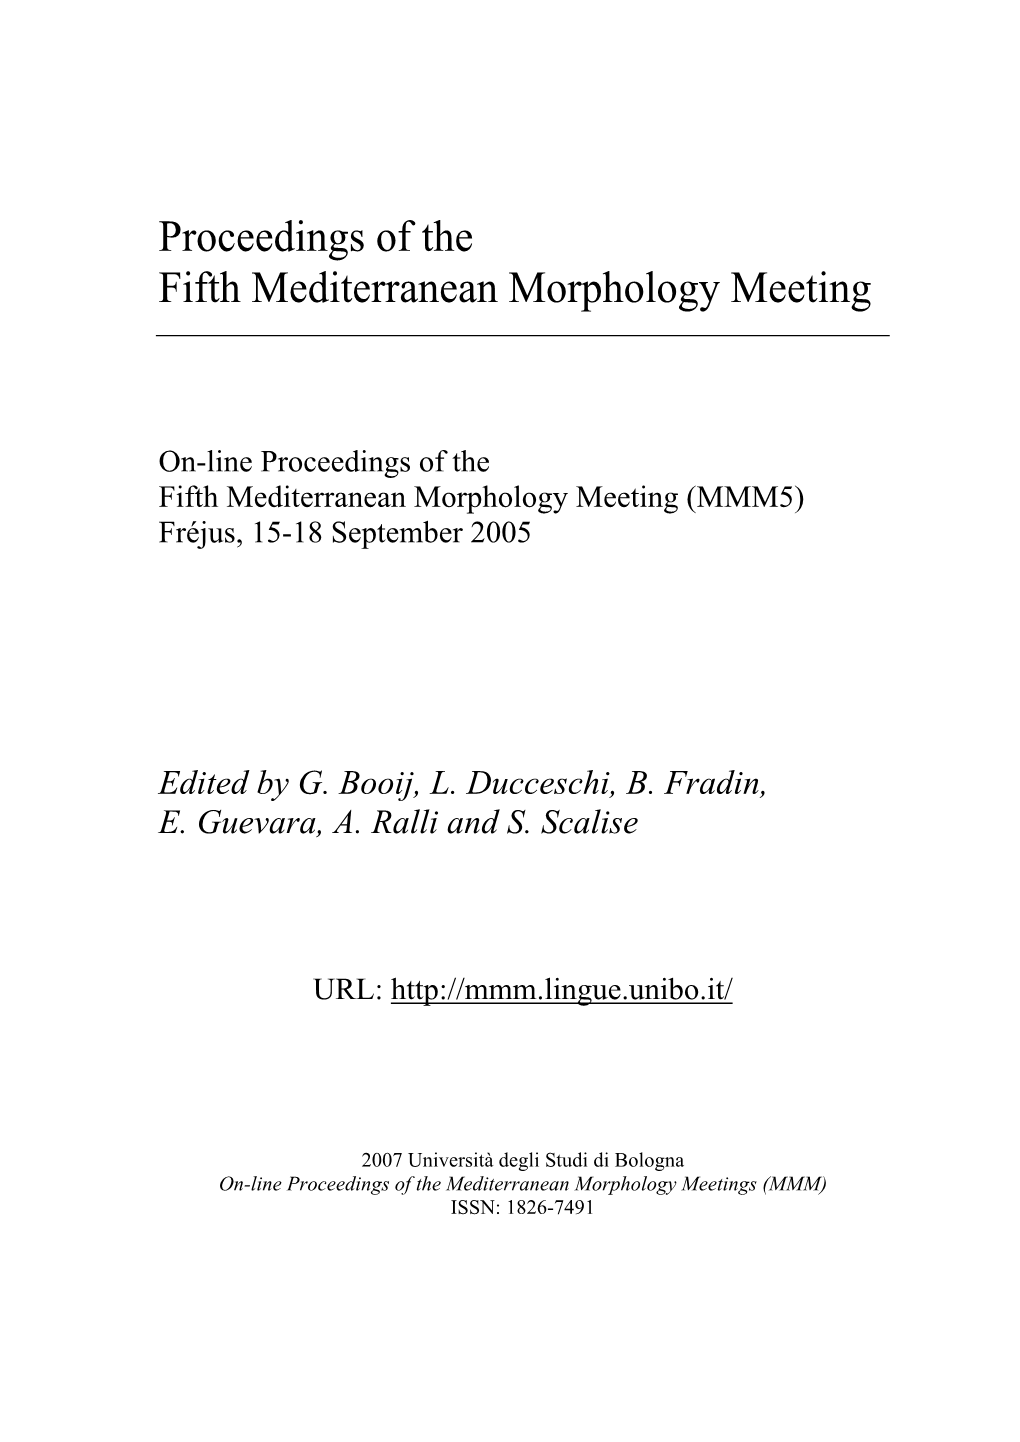 Proceedings of the Fifth Mediterranean Morphology Meeting